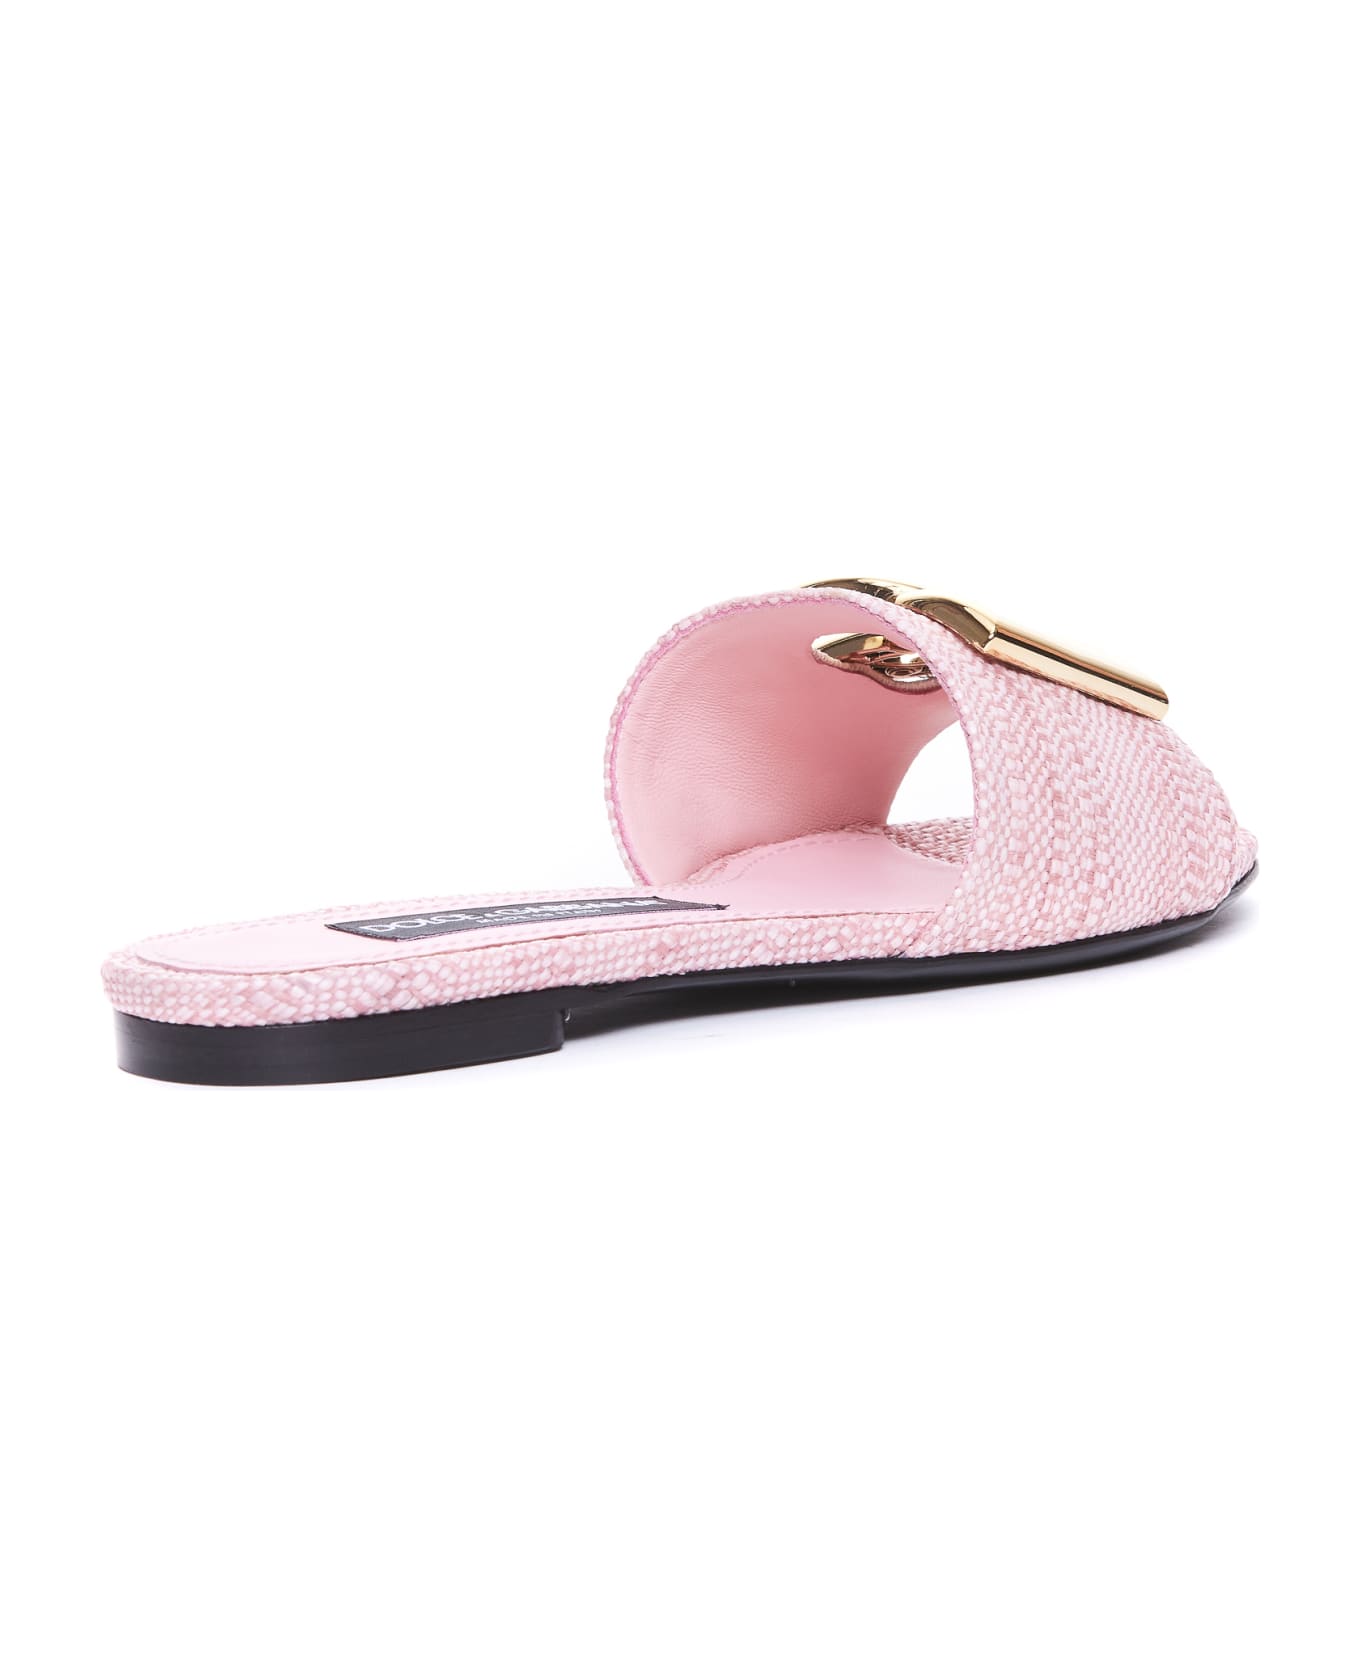 Dolce & Gabbana Pink Fabric Slippers - ROSA BABY2 サンダル